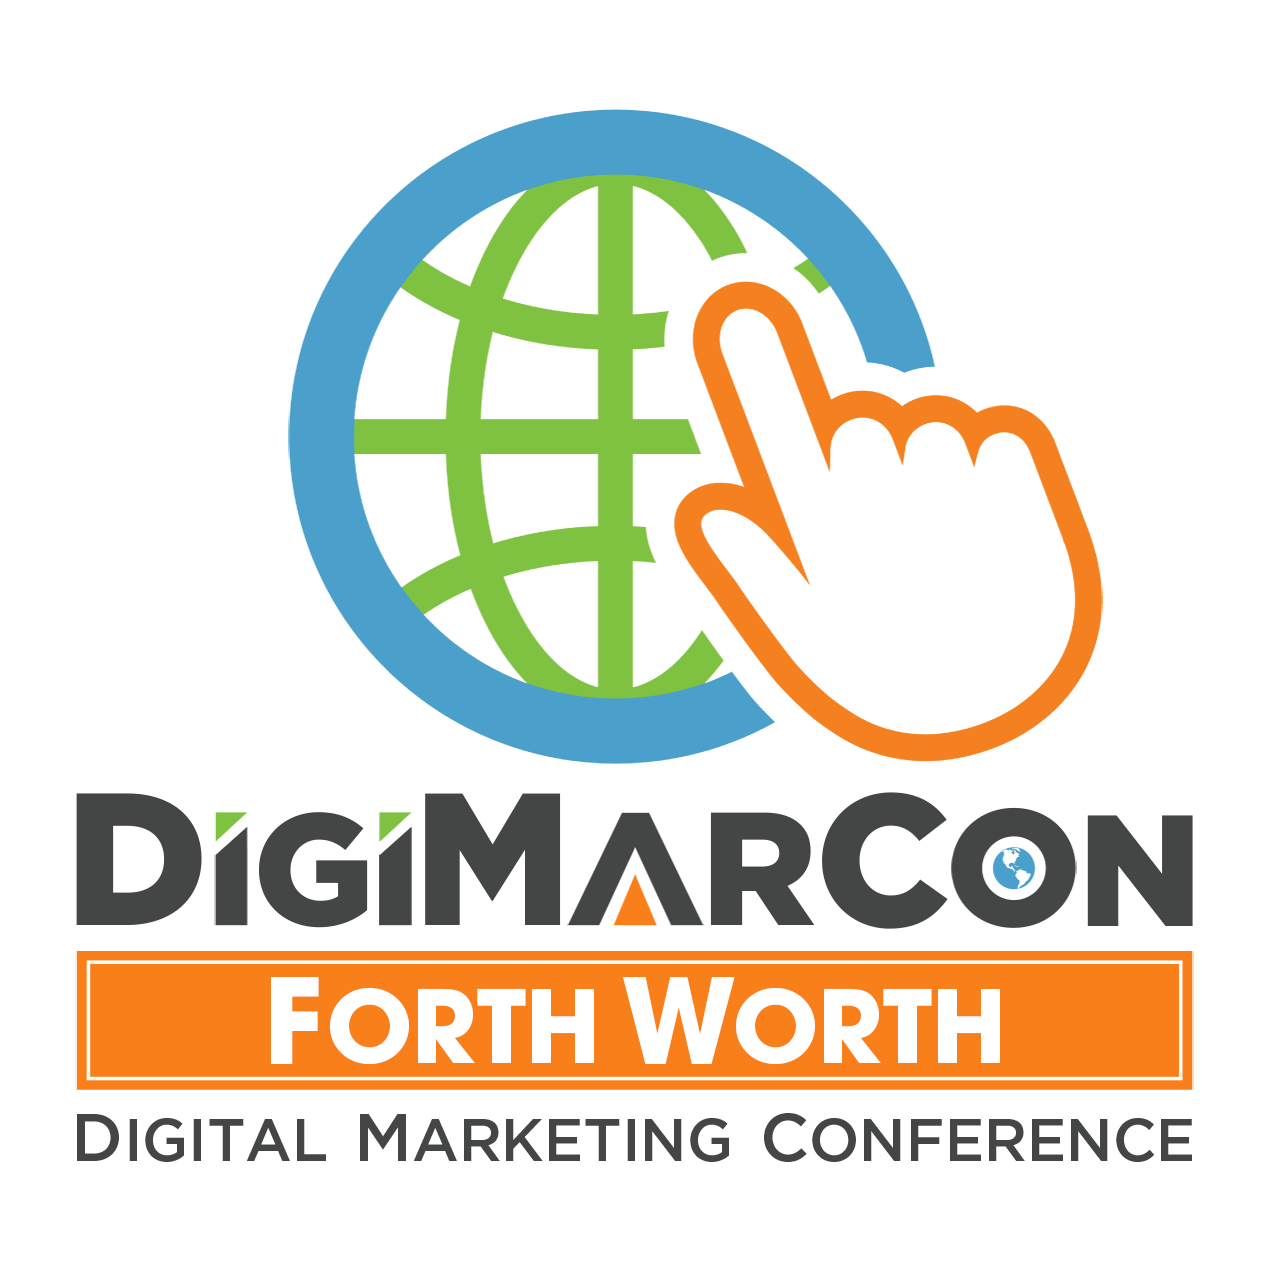 Fort Worth Digital Marketing, Media & Advertising Conference